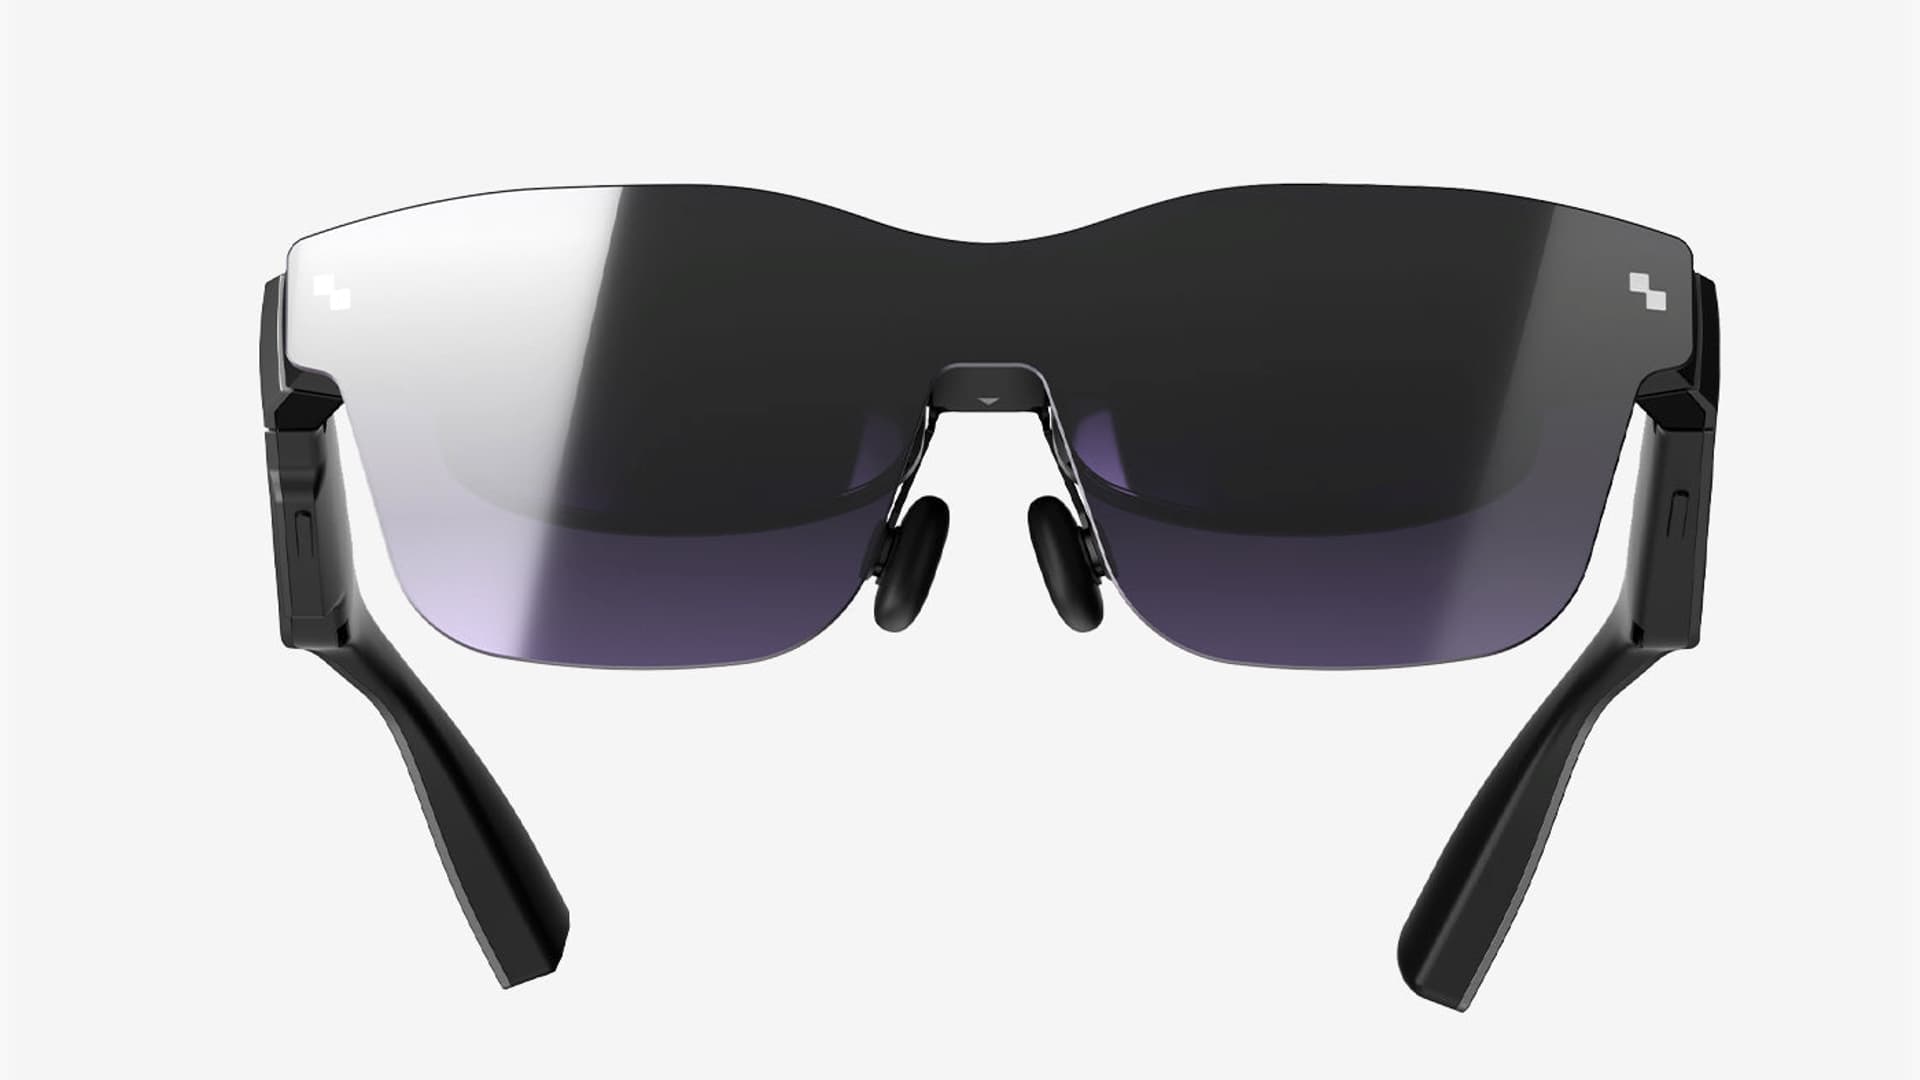 Style & Focus, Part III: 7 Smartglasses to Watch